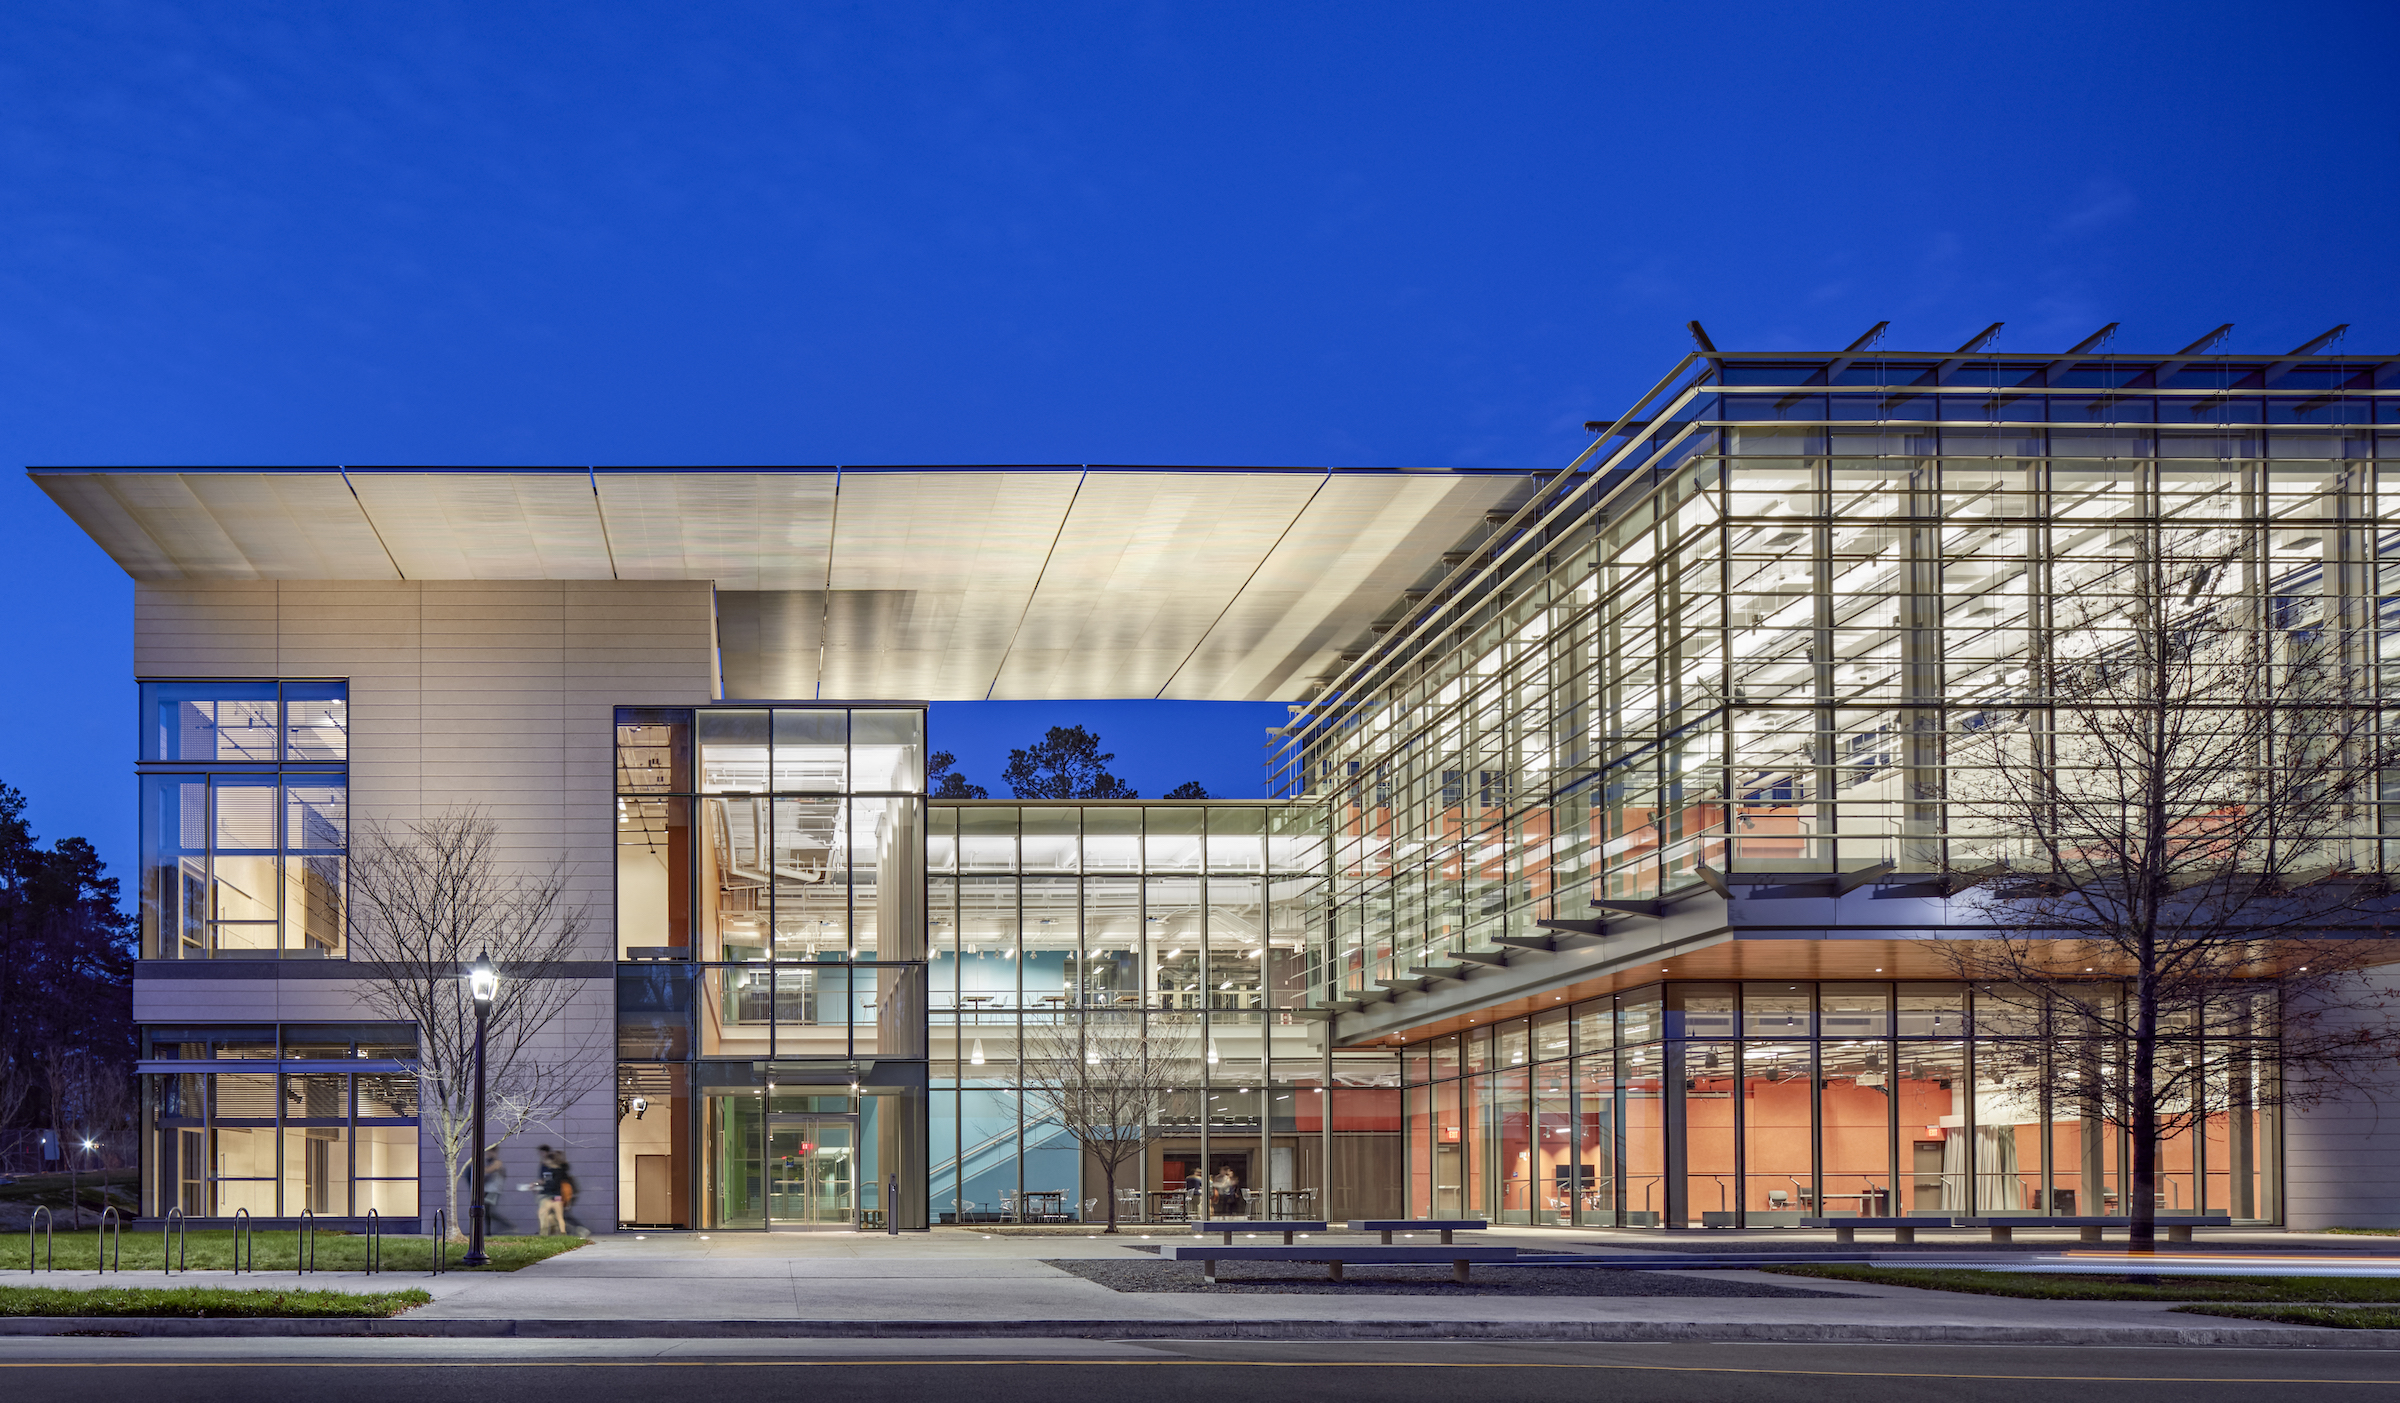 Rubenstein Arts Center at Duke University